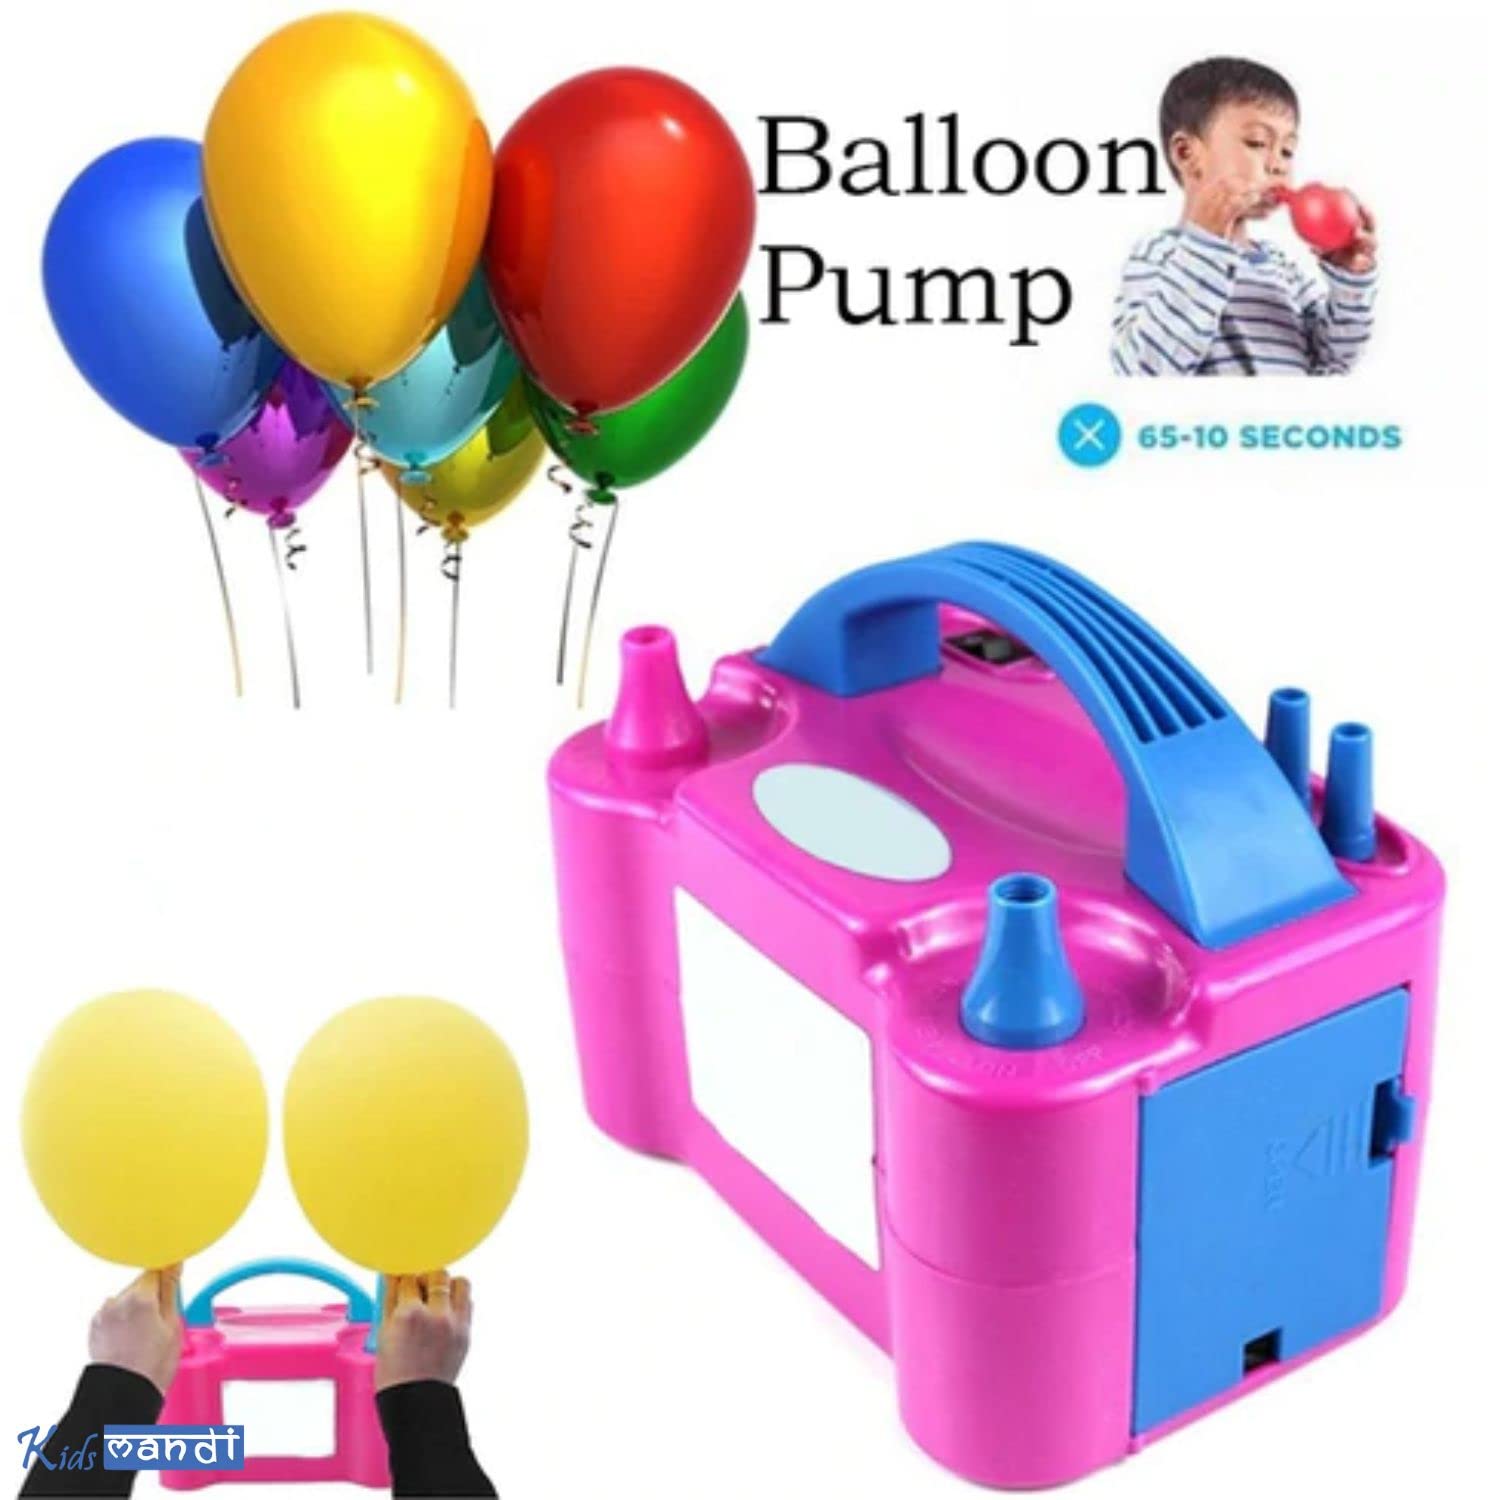 Kids Mandi portable electric air balloon pump with dual nozzle.